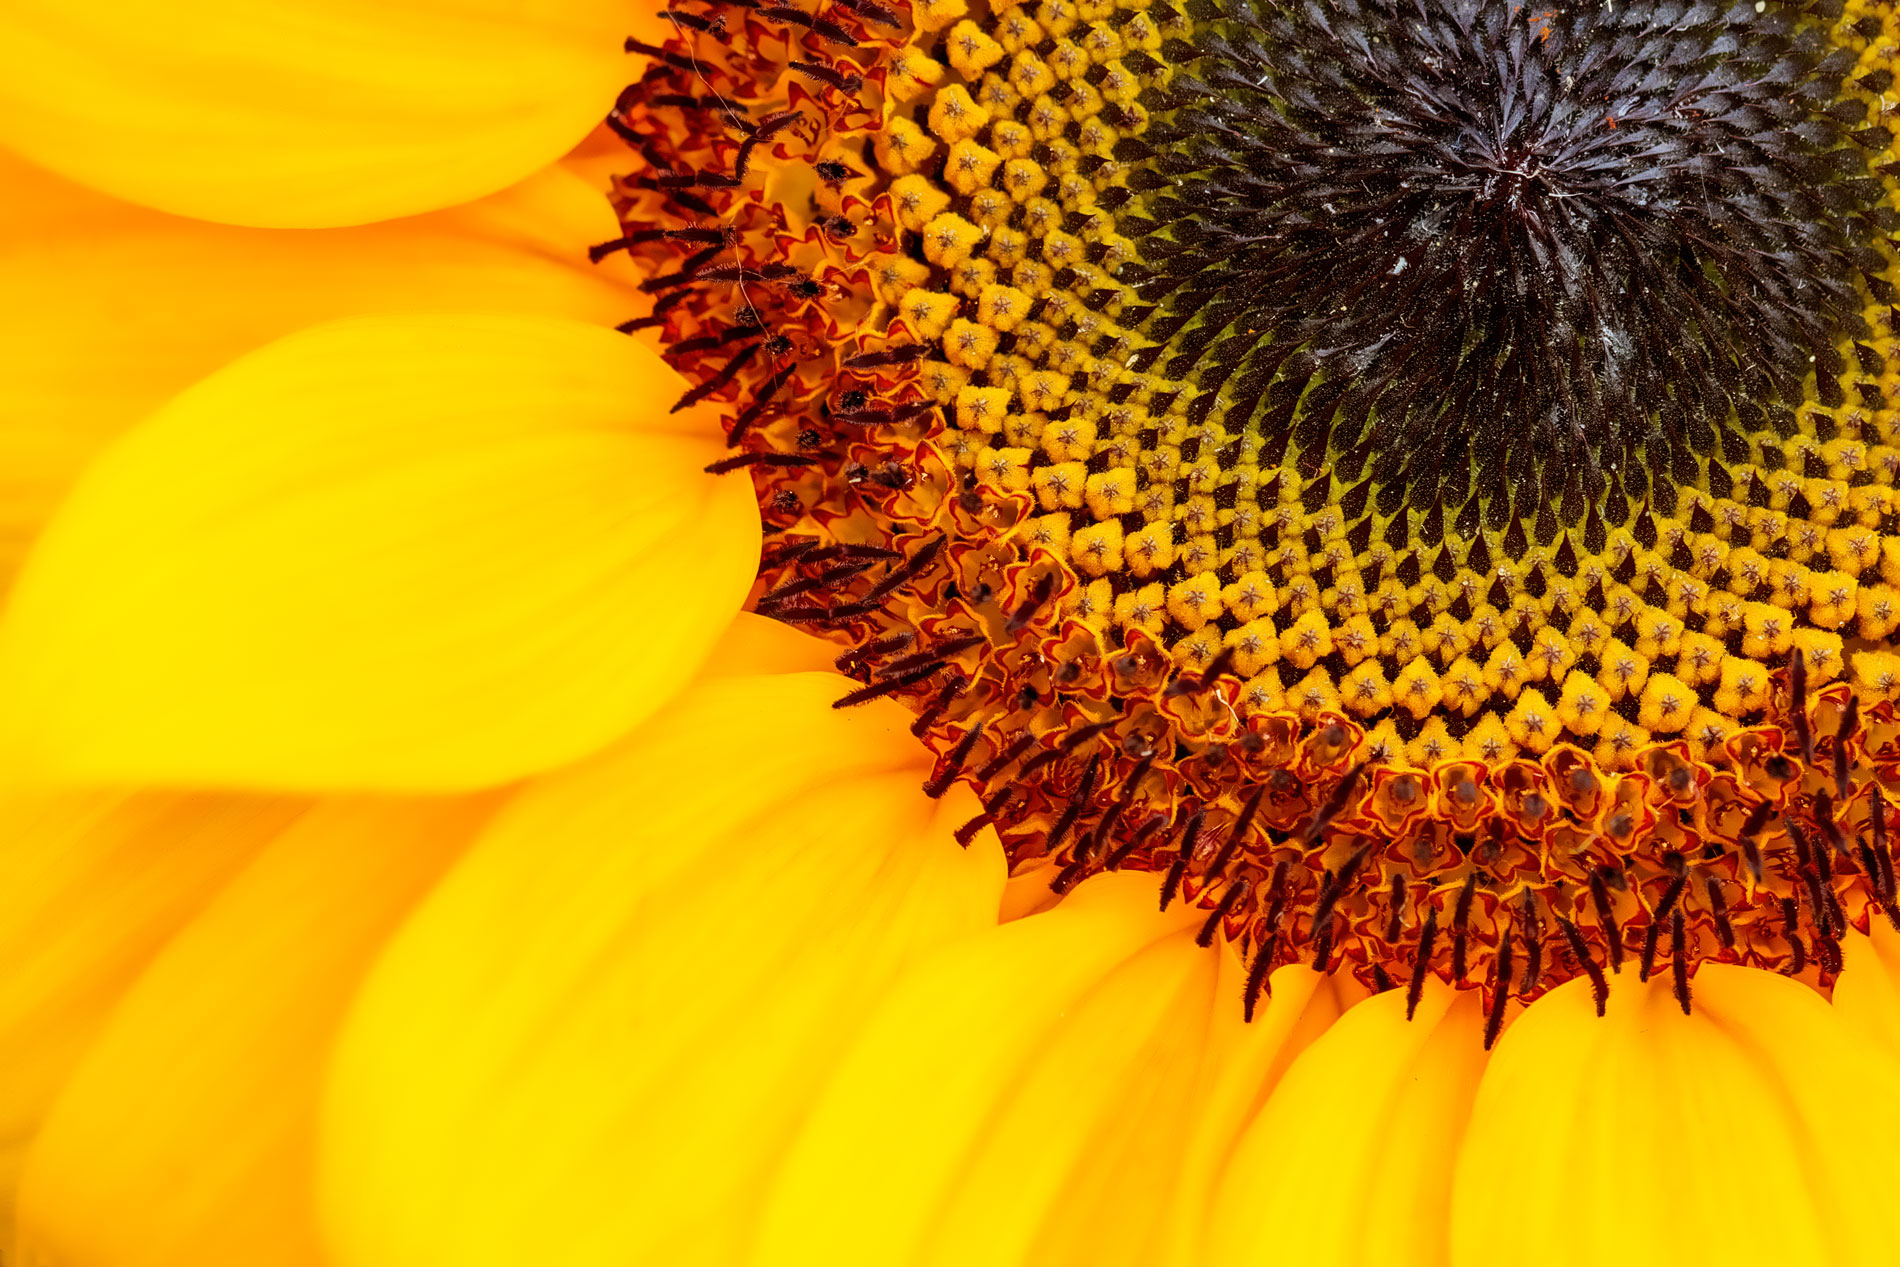 Golden Ratio Sunflower